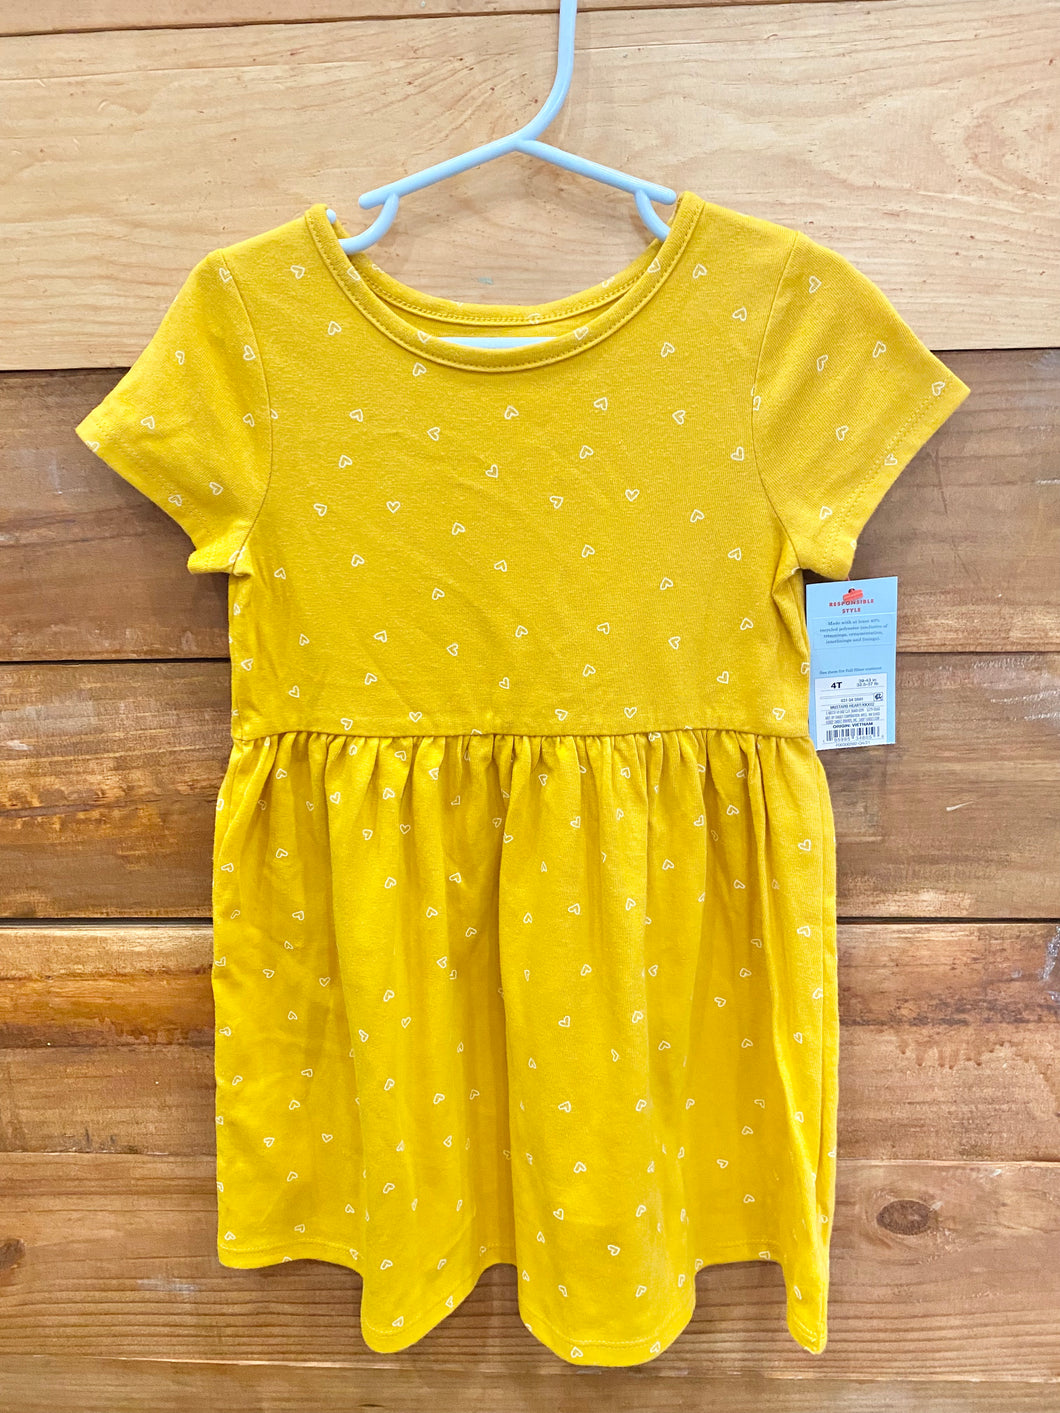 Cat & Jack Yellow Hearts Dress Size 4T